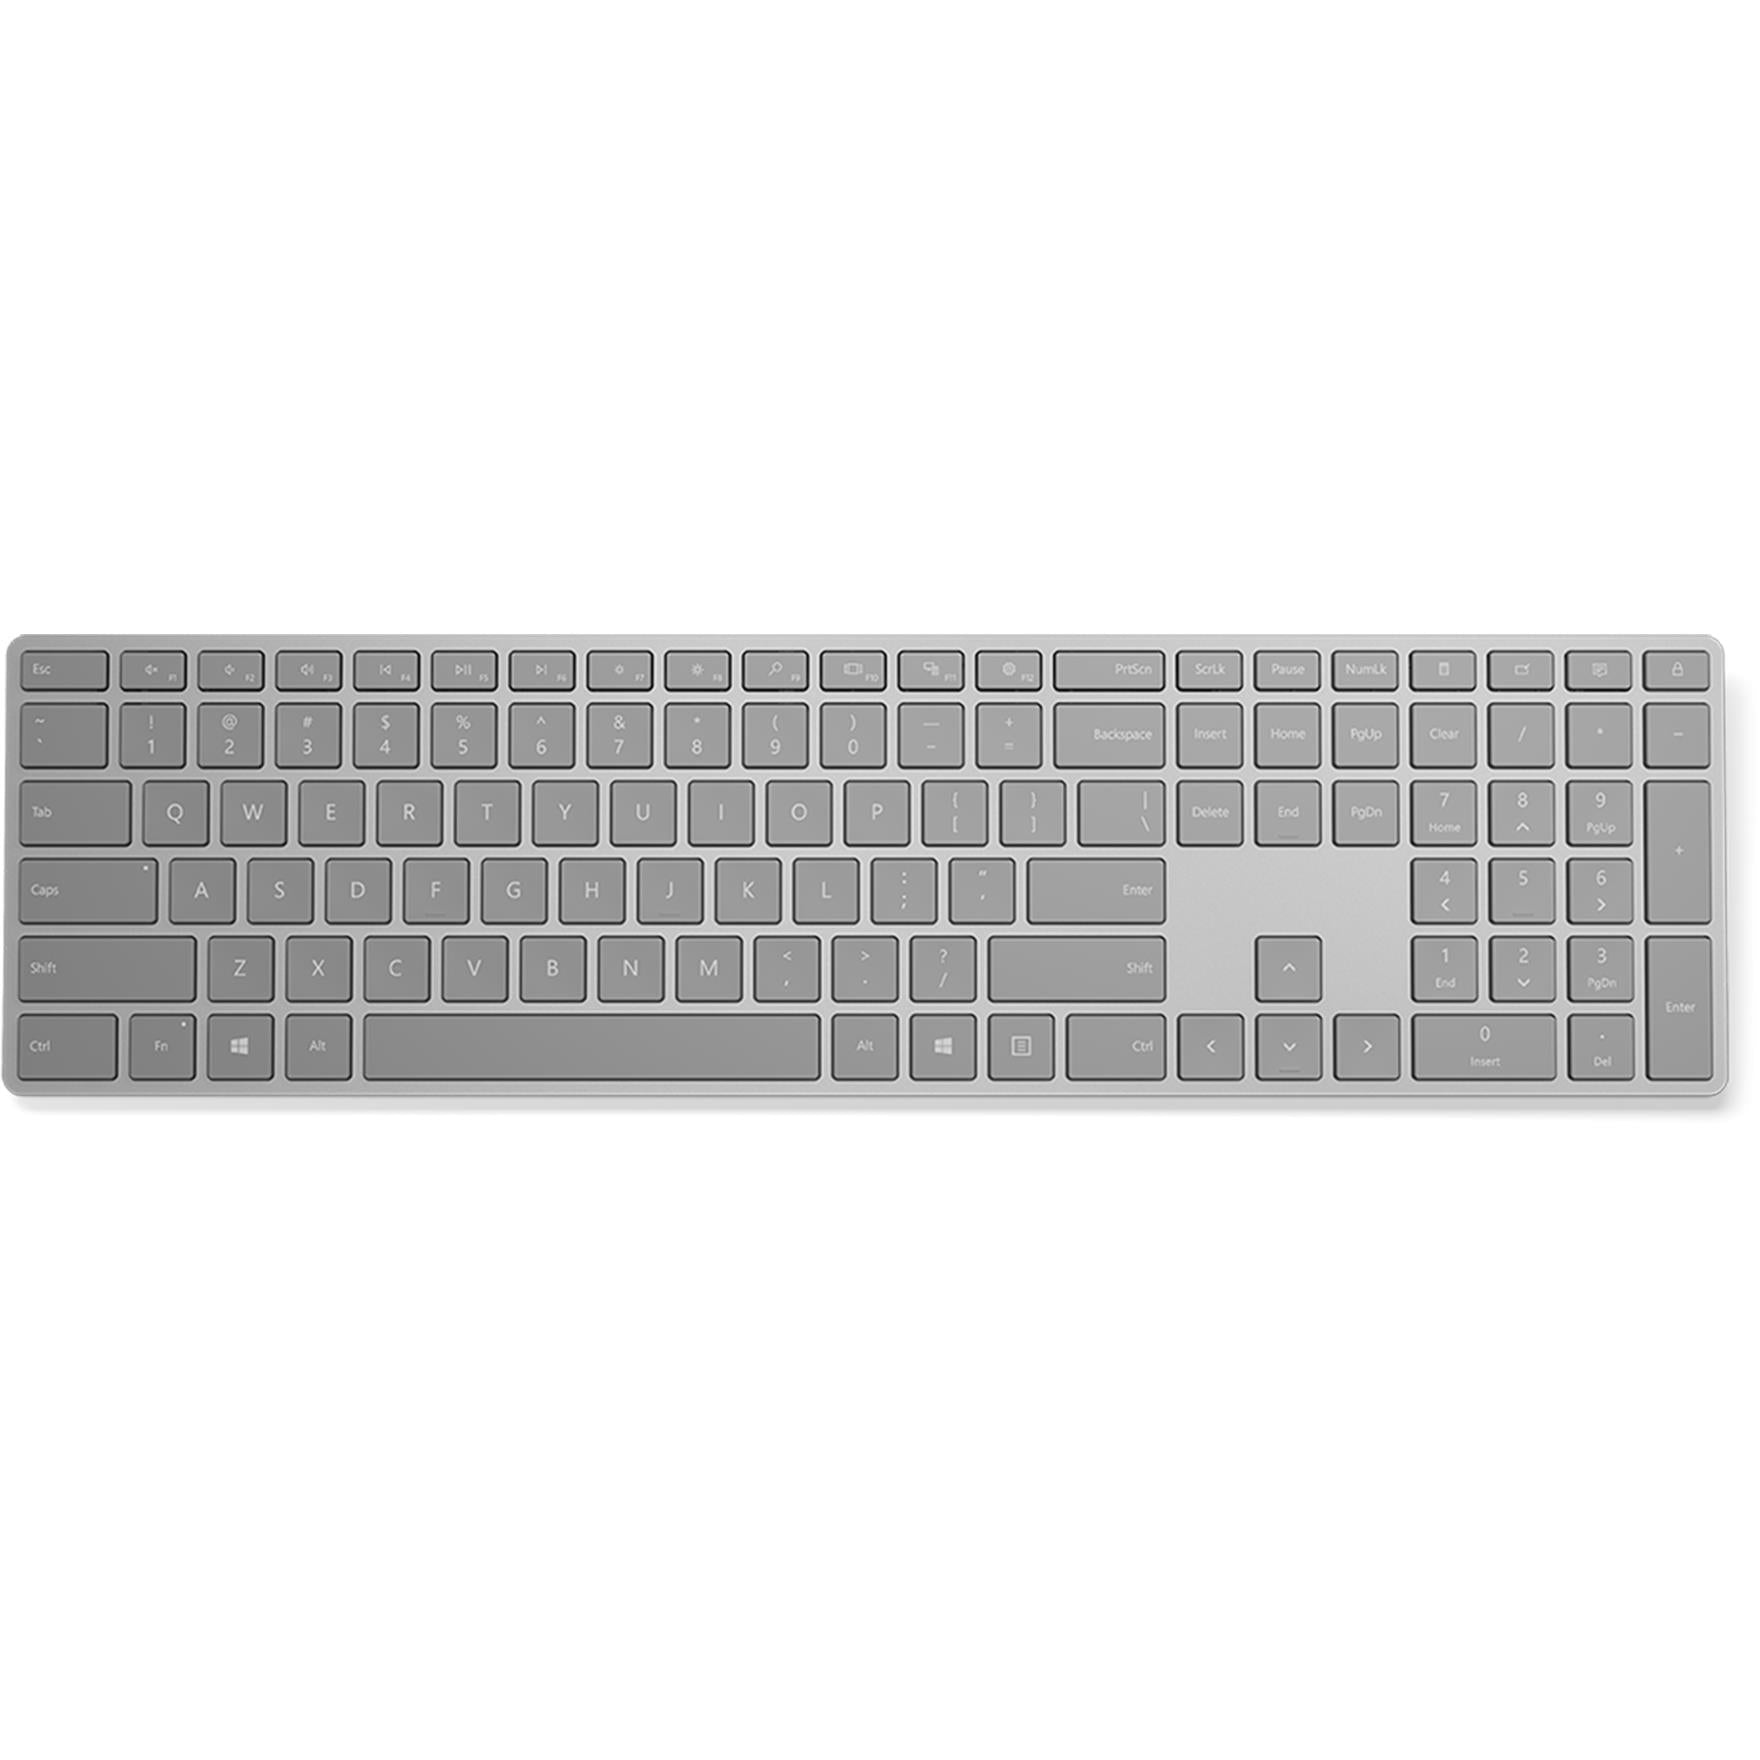 microsoft surface keyboard